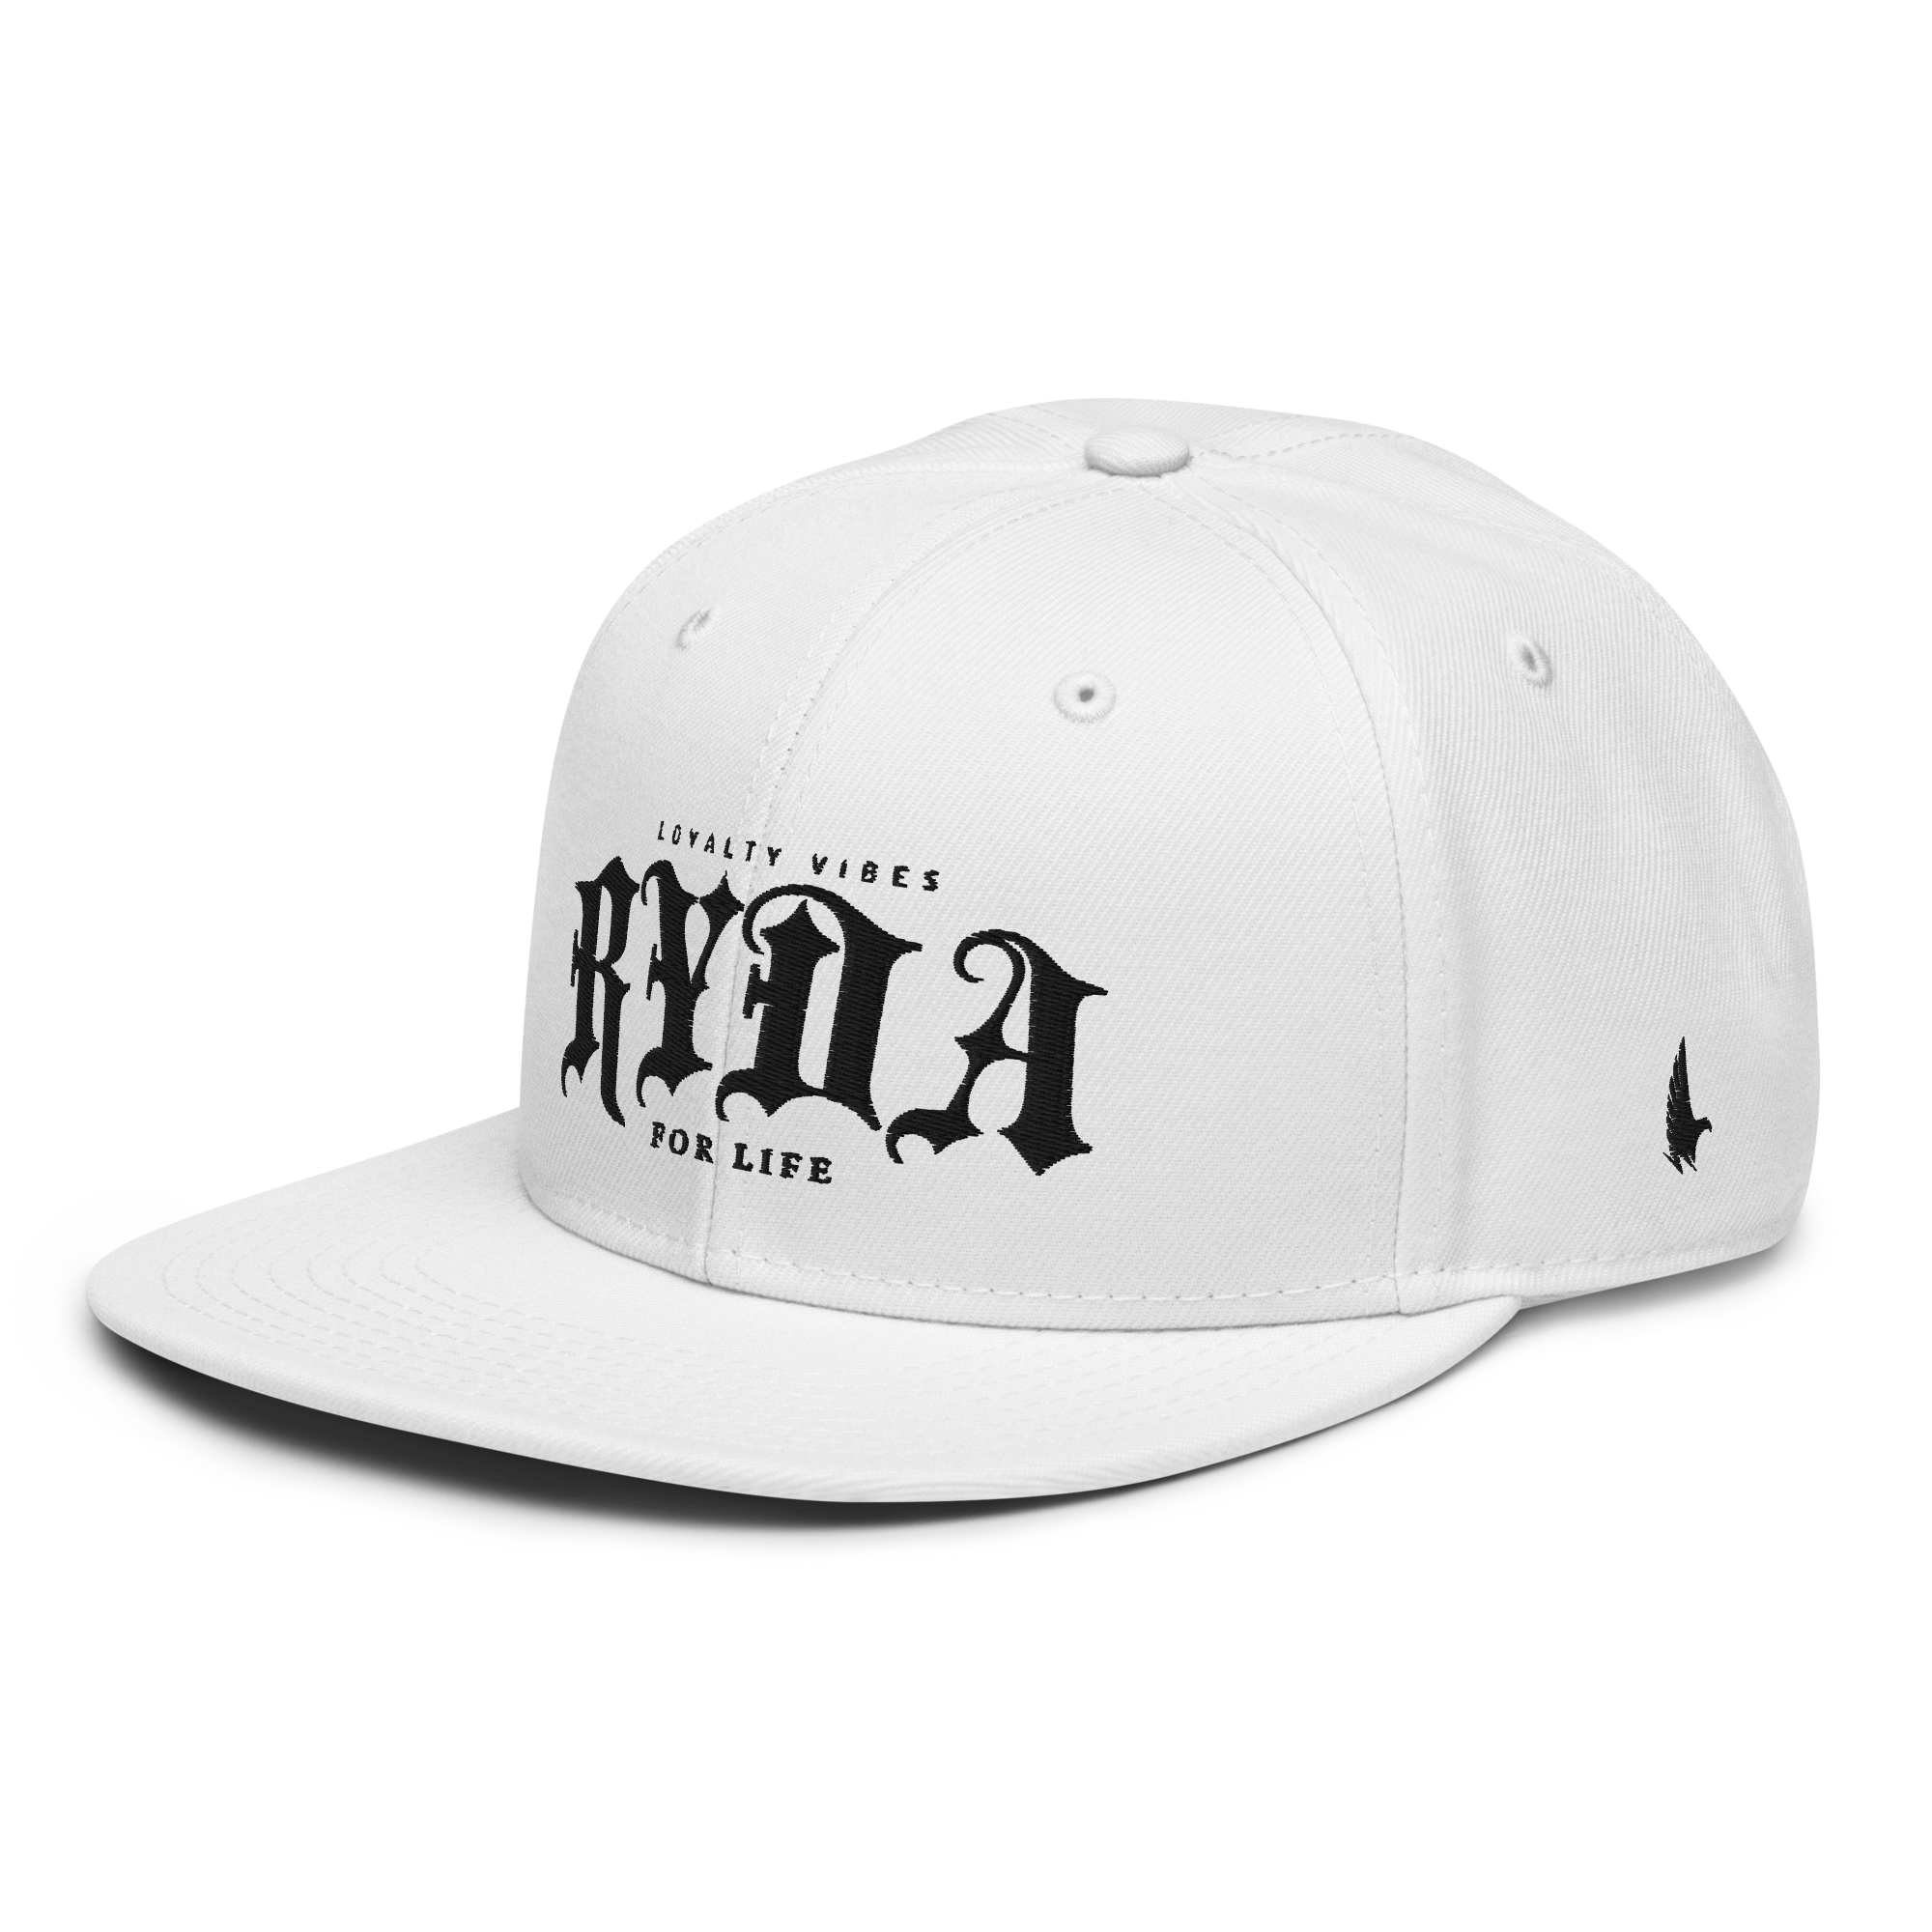 Ryda For Life Snapback Hat - White/Black - Loyalty Vibes